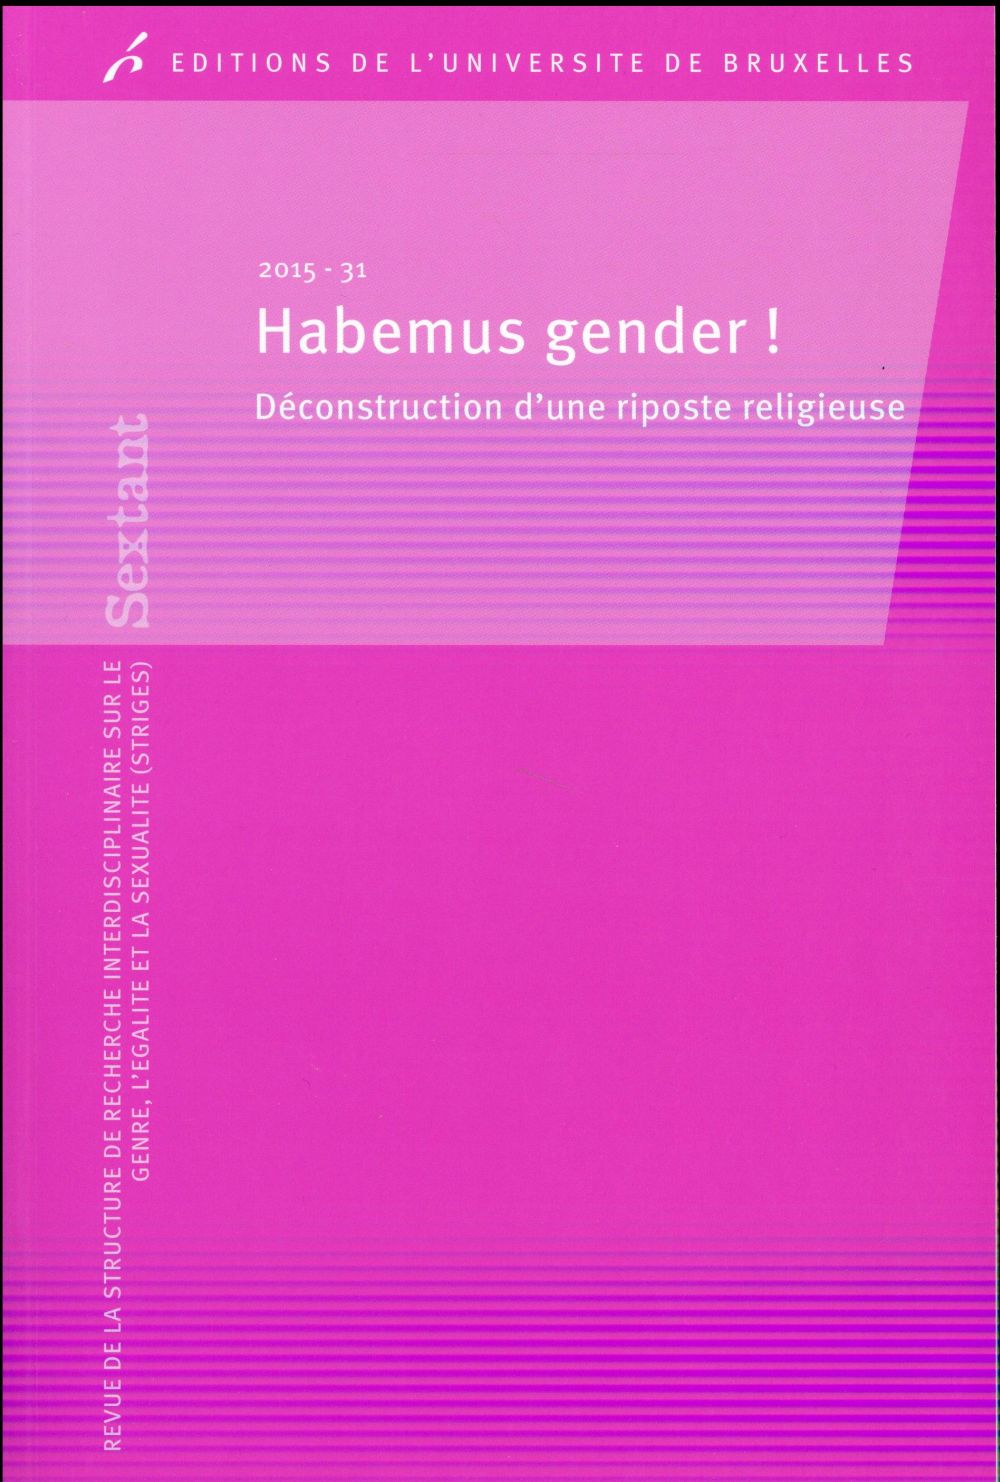 HABEMUS GENDER ! DECONSTRUCTION D UNE RIPOSTERELIGIEUSE